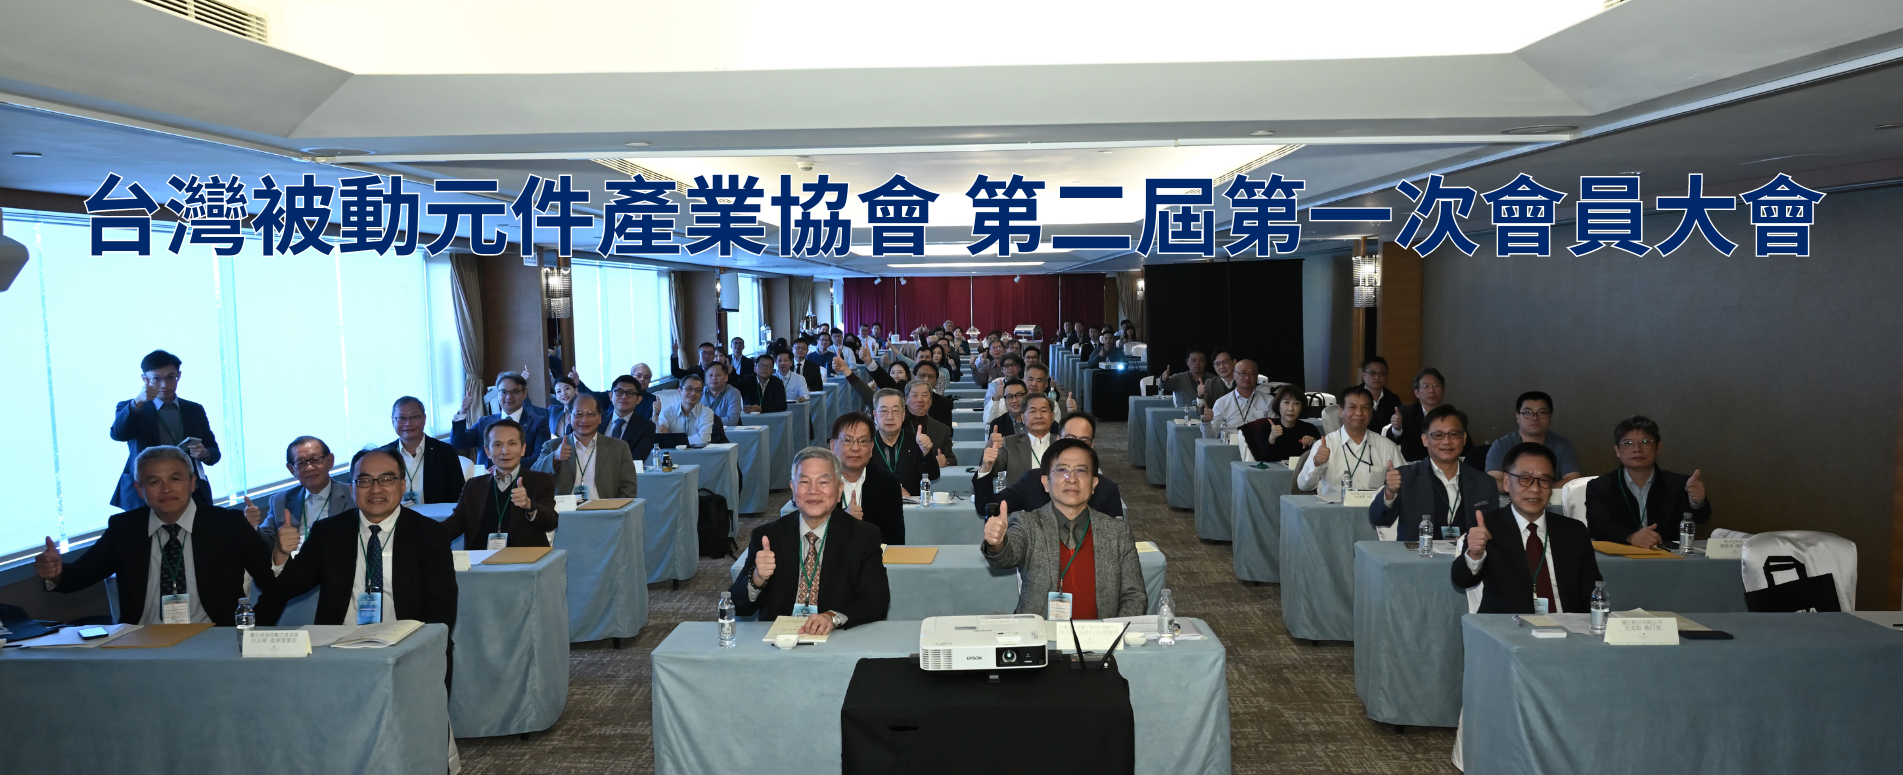 TPCIA Annual General Meeting